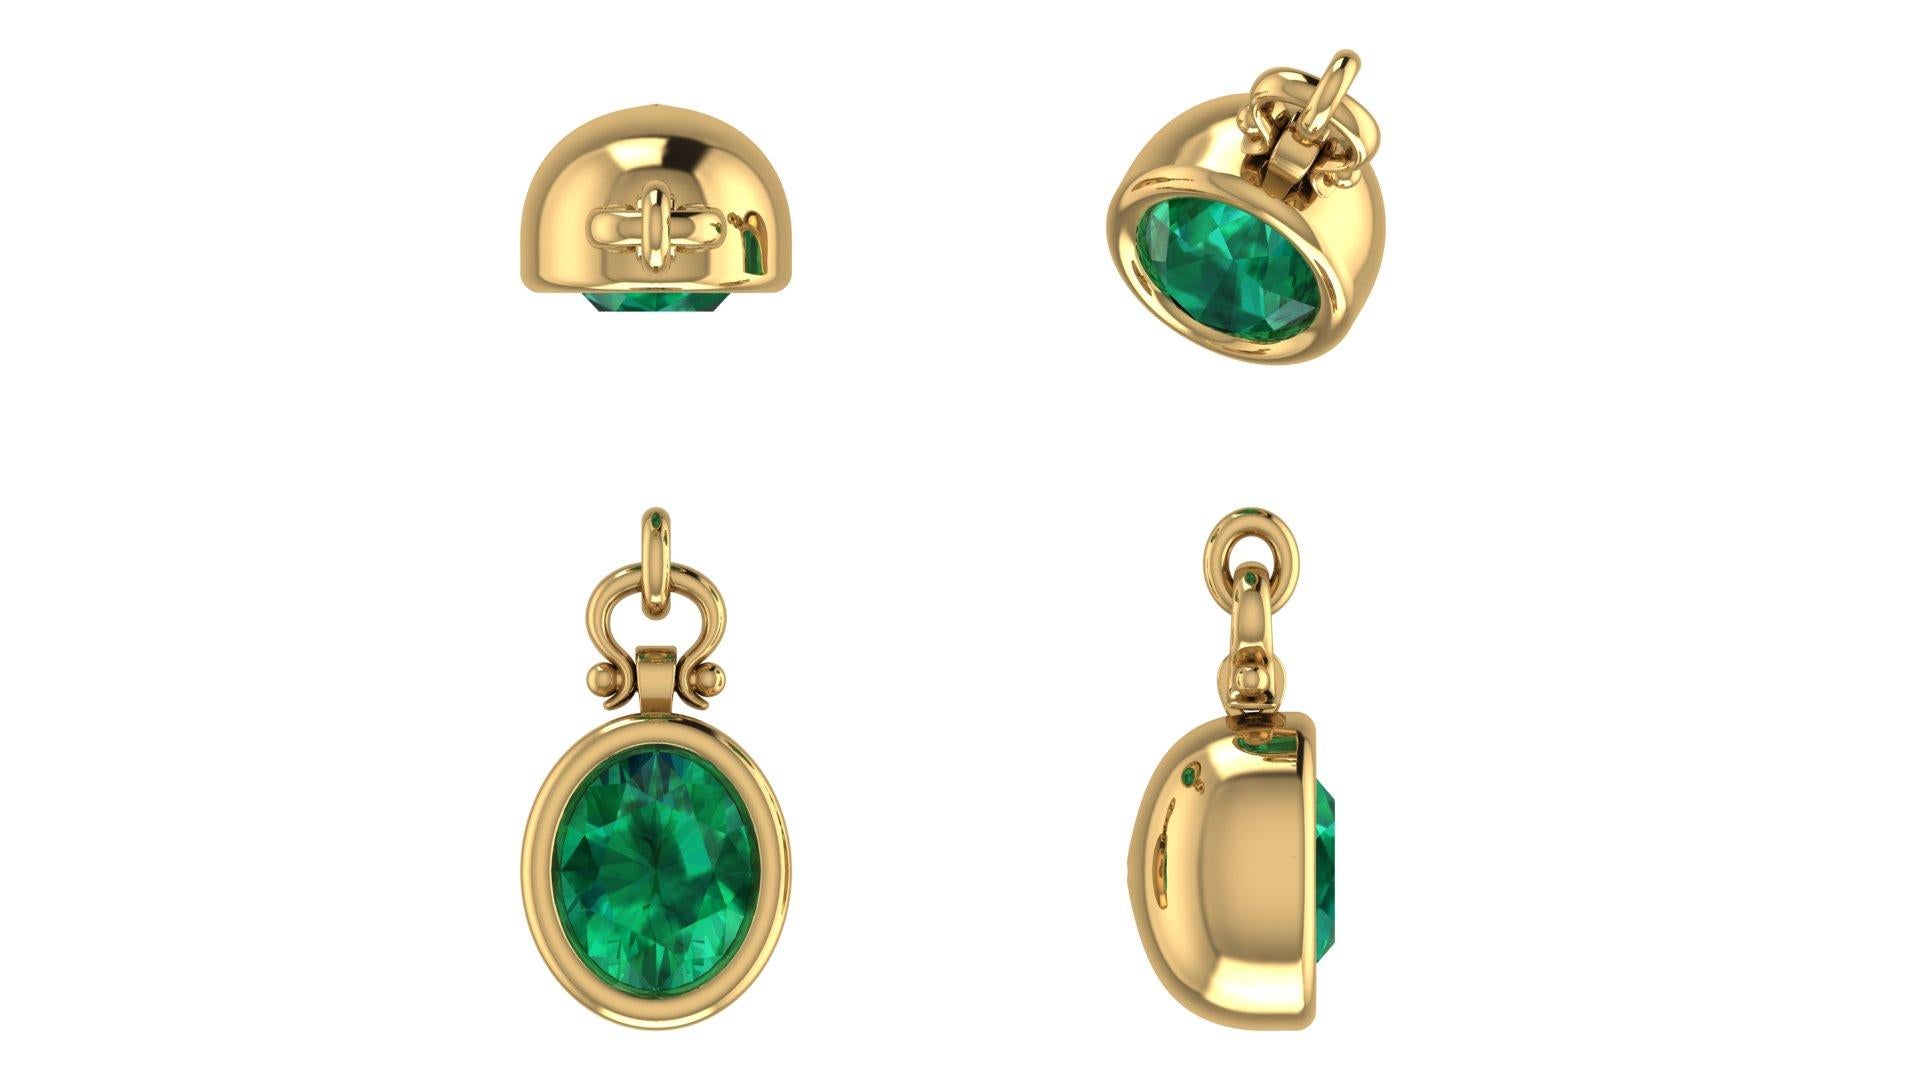 2.26 Carat Oval Cut Emerald Pendant Necklace in 18k For Sale 1